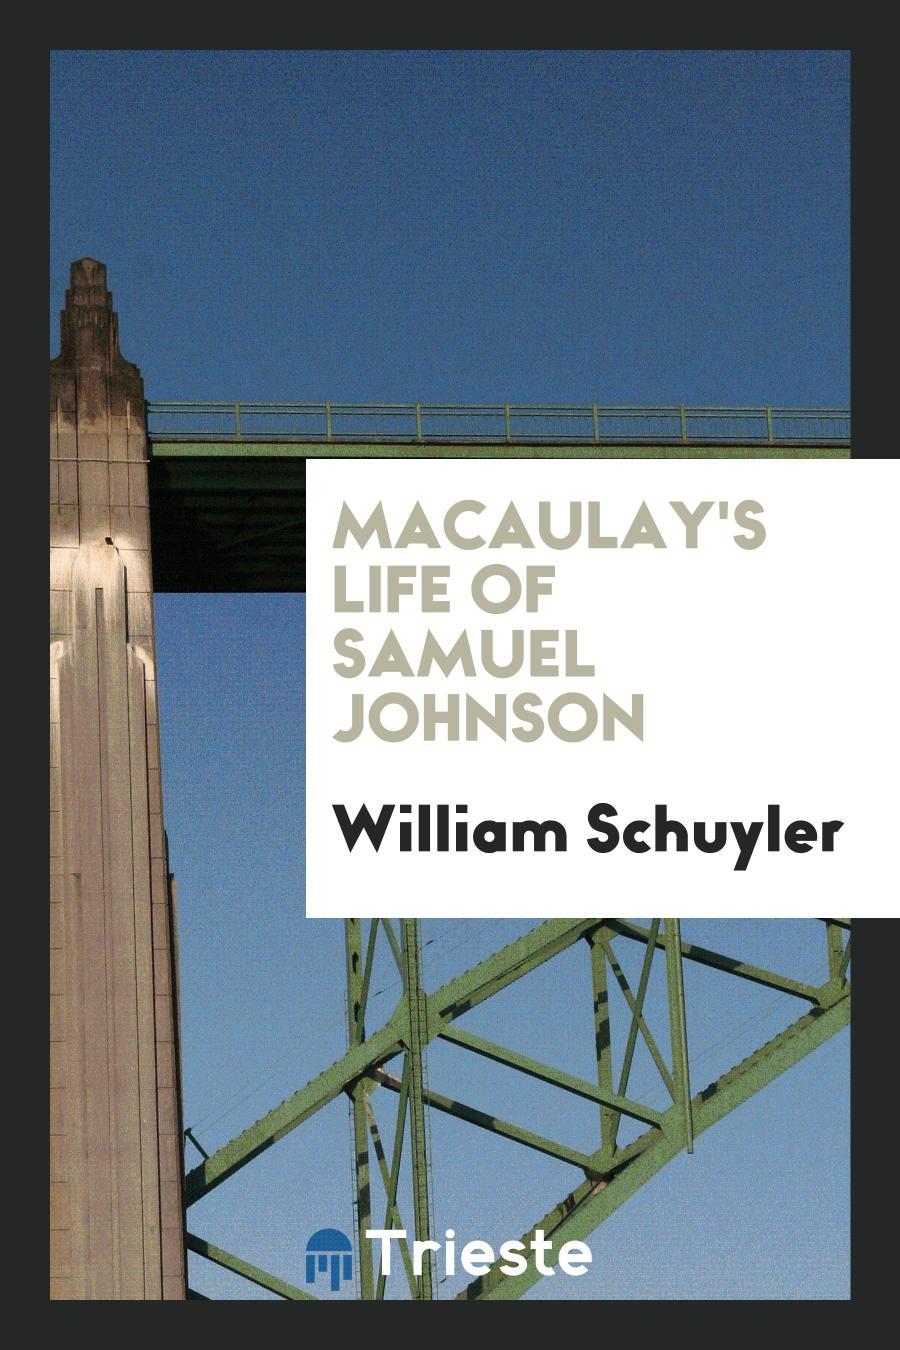 Macaulay's life of Samuel Johnson